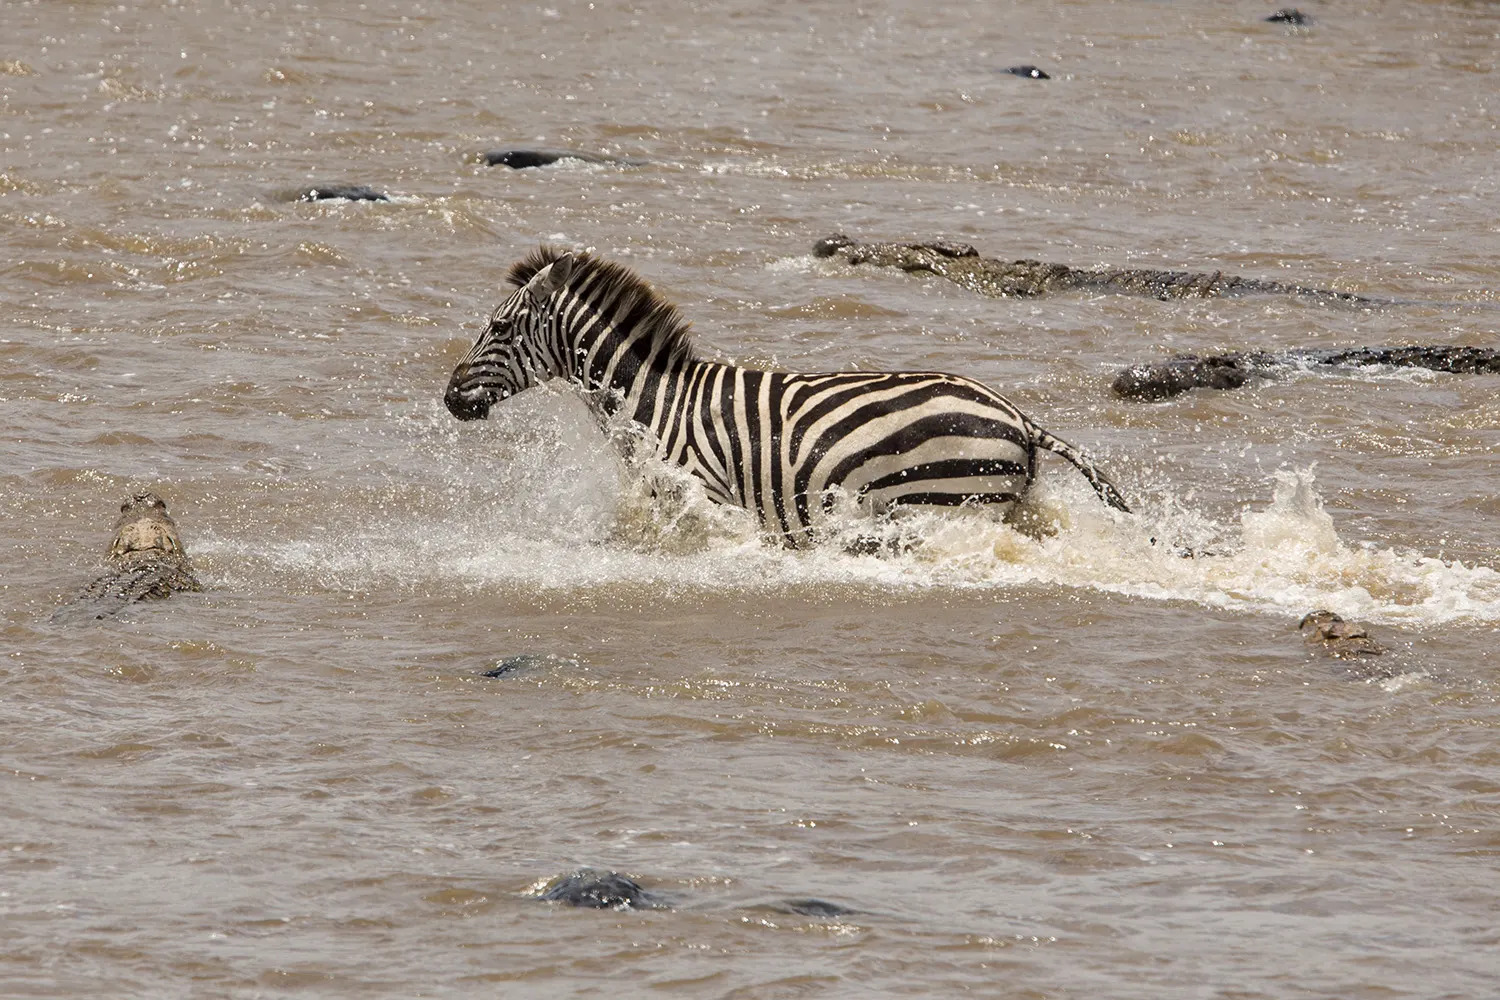 Zebra crossing mara river